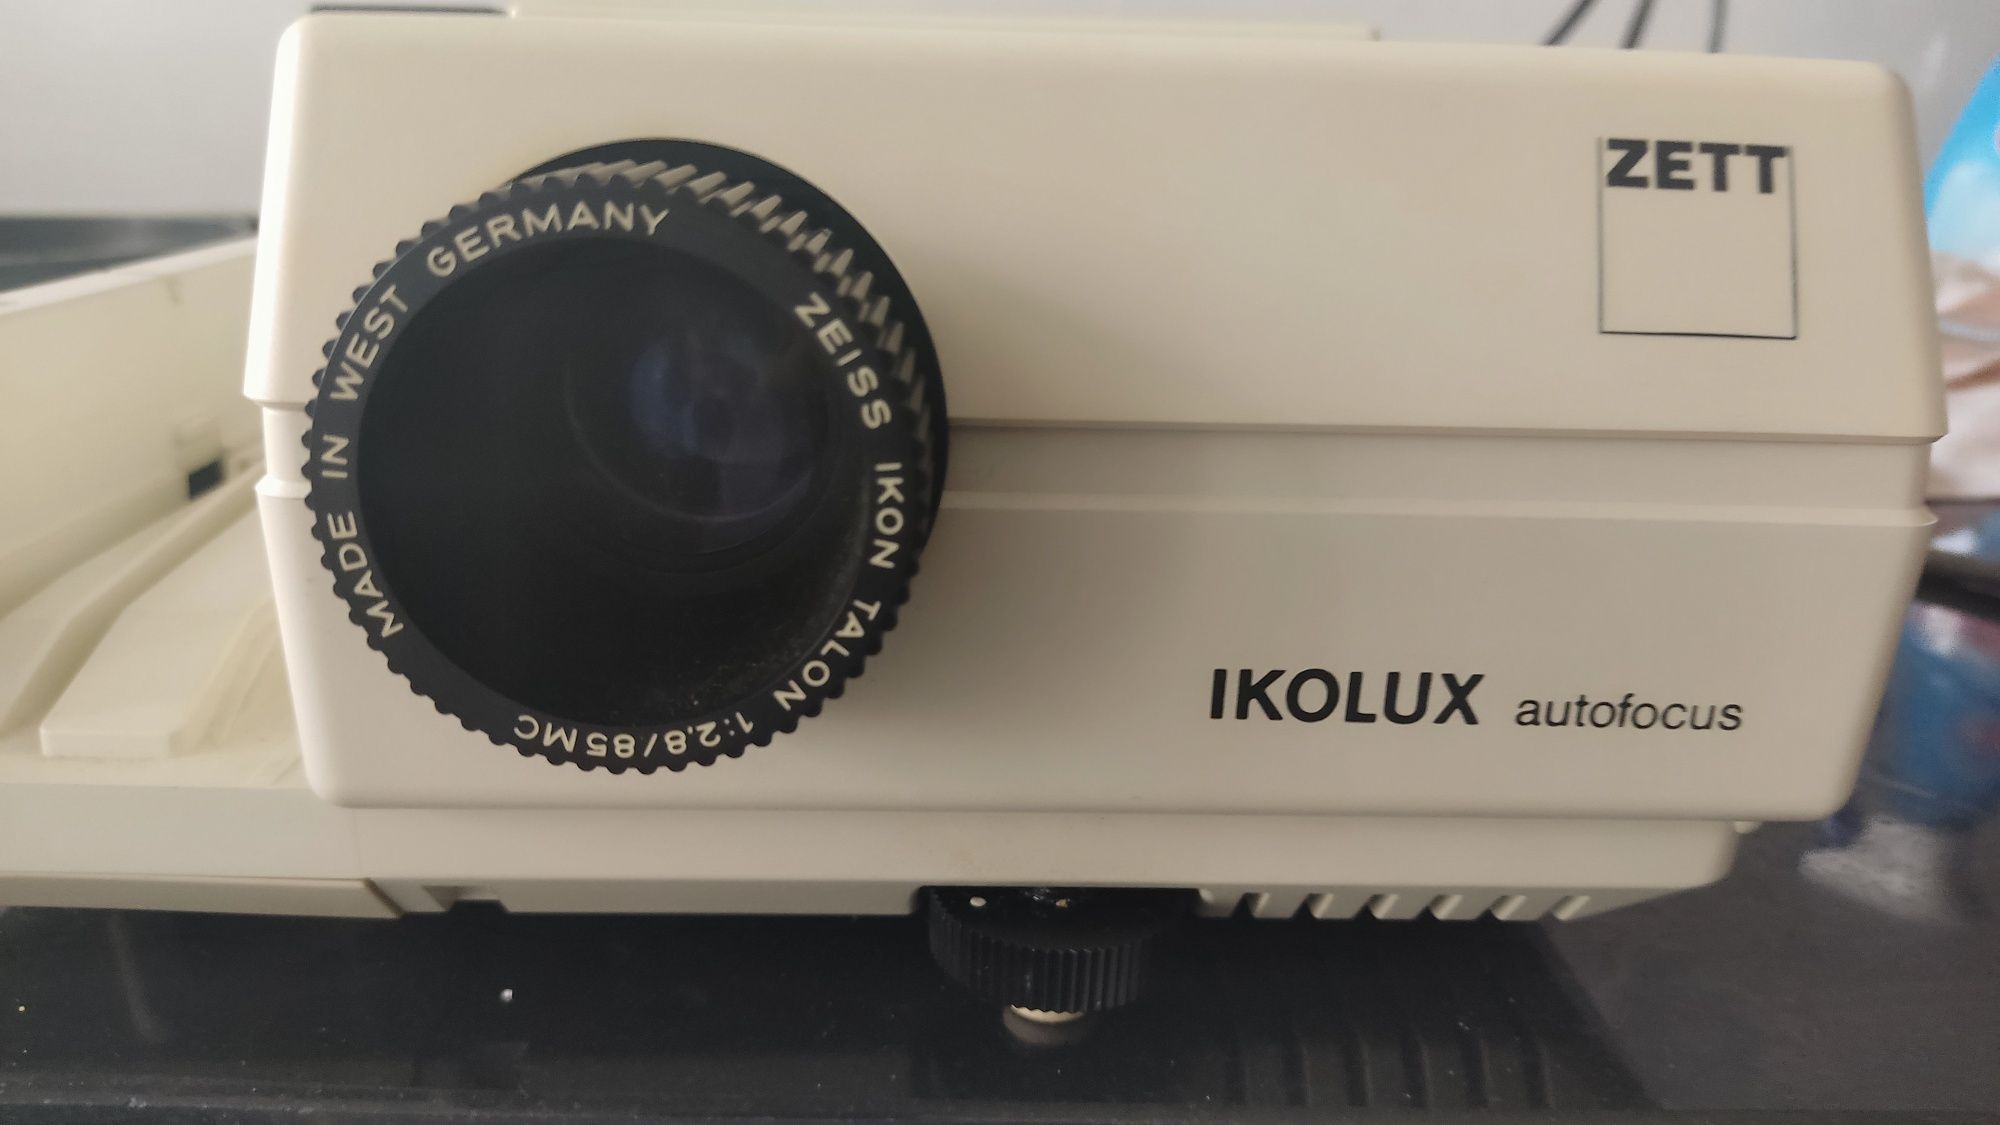 Projector slides Zett Ikolux autofocus